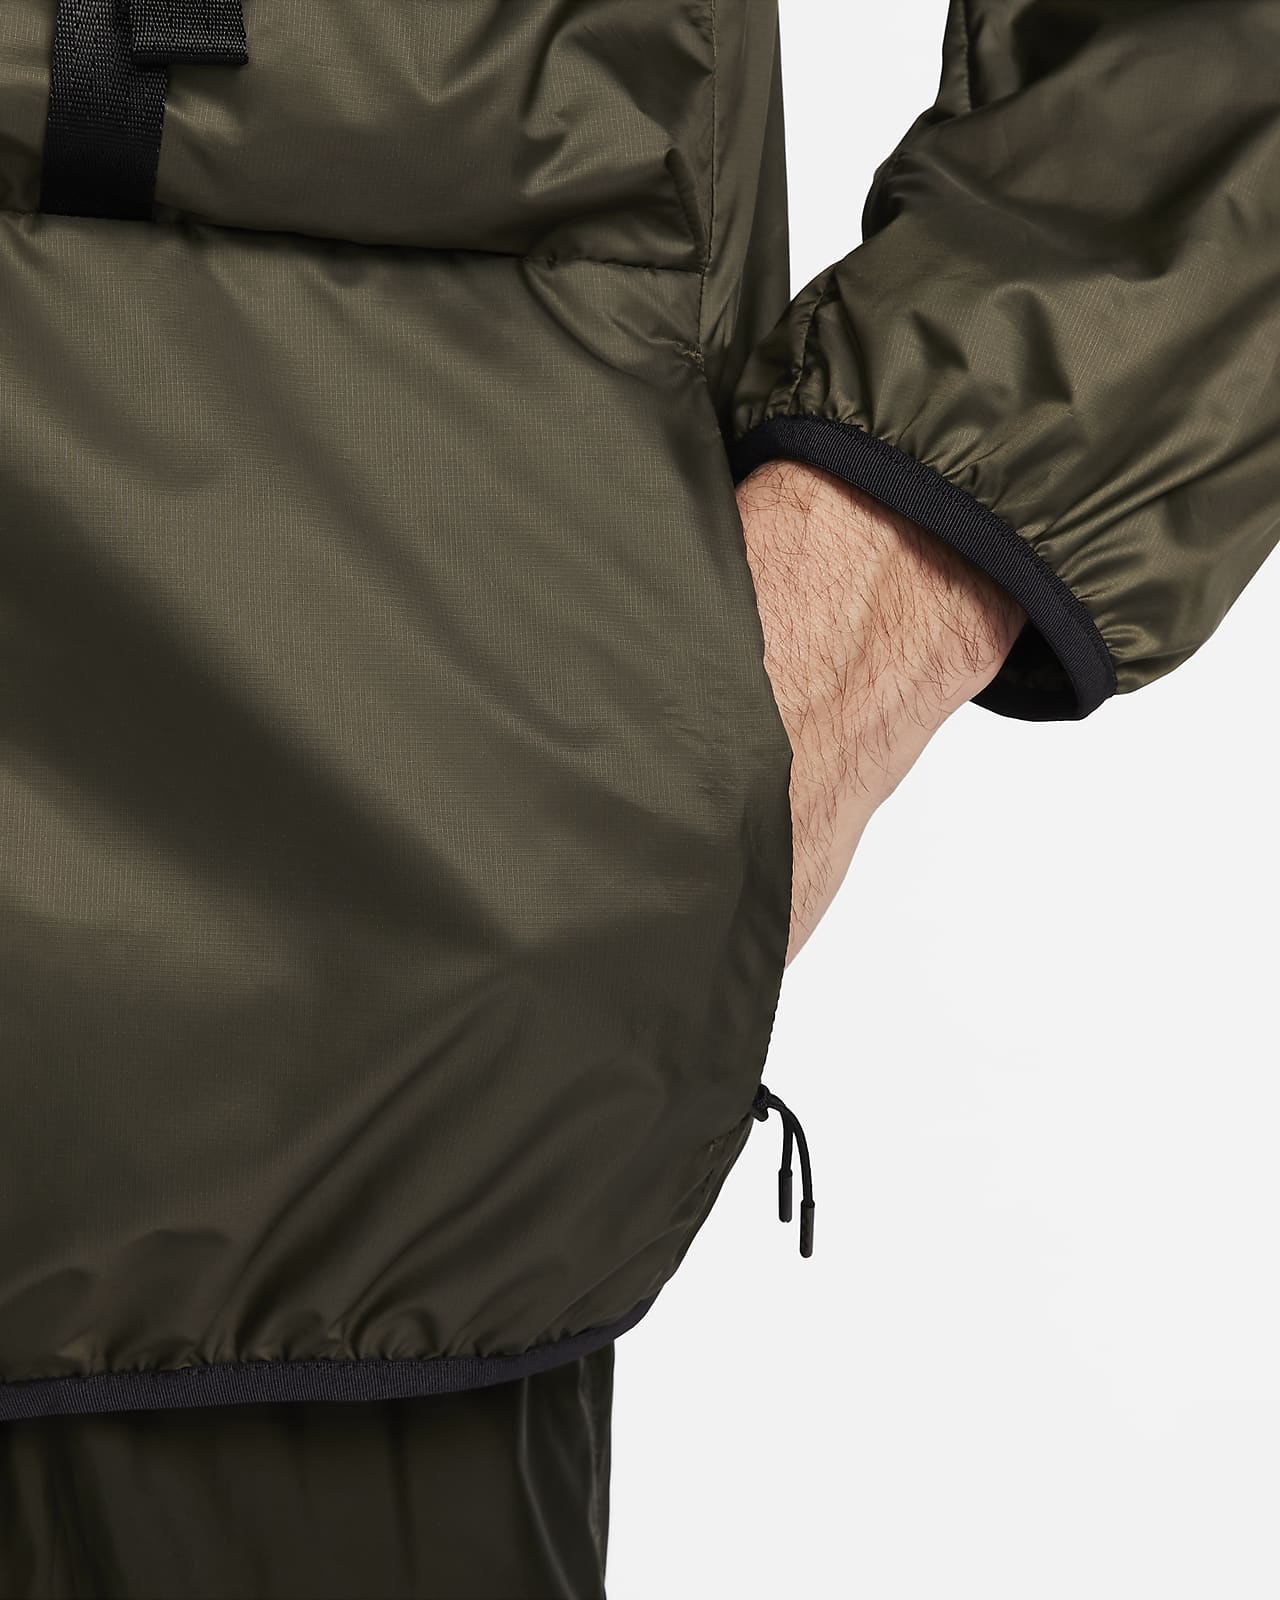 90's NIKE Silver Tag Size Boys XL Nylon Jacket / F2429N – FISHTALE